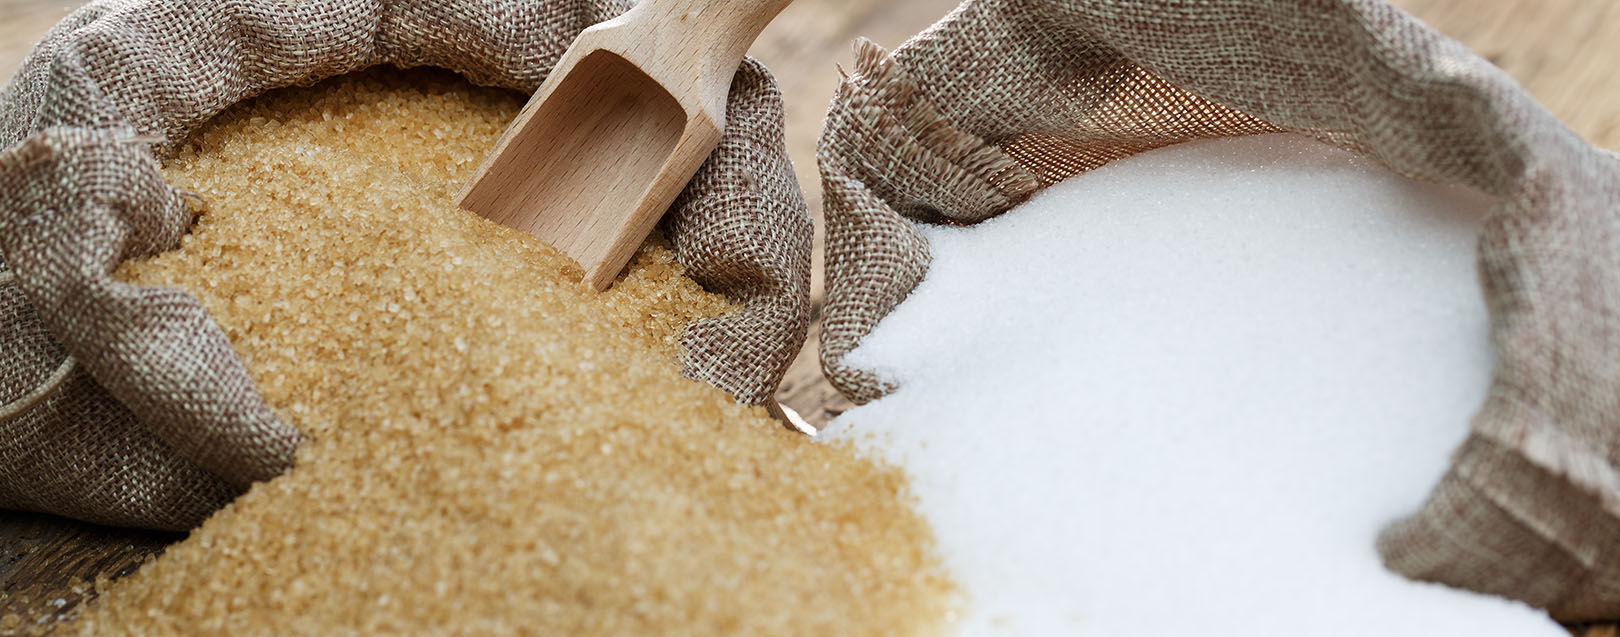 Govt extends deadline for duty free sugar import till June 30